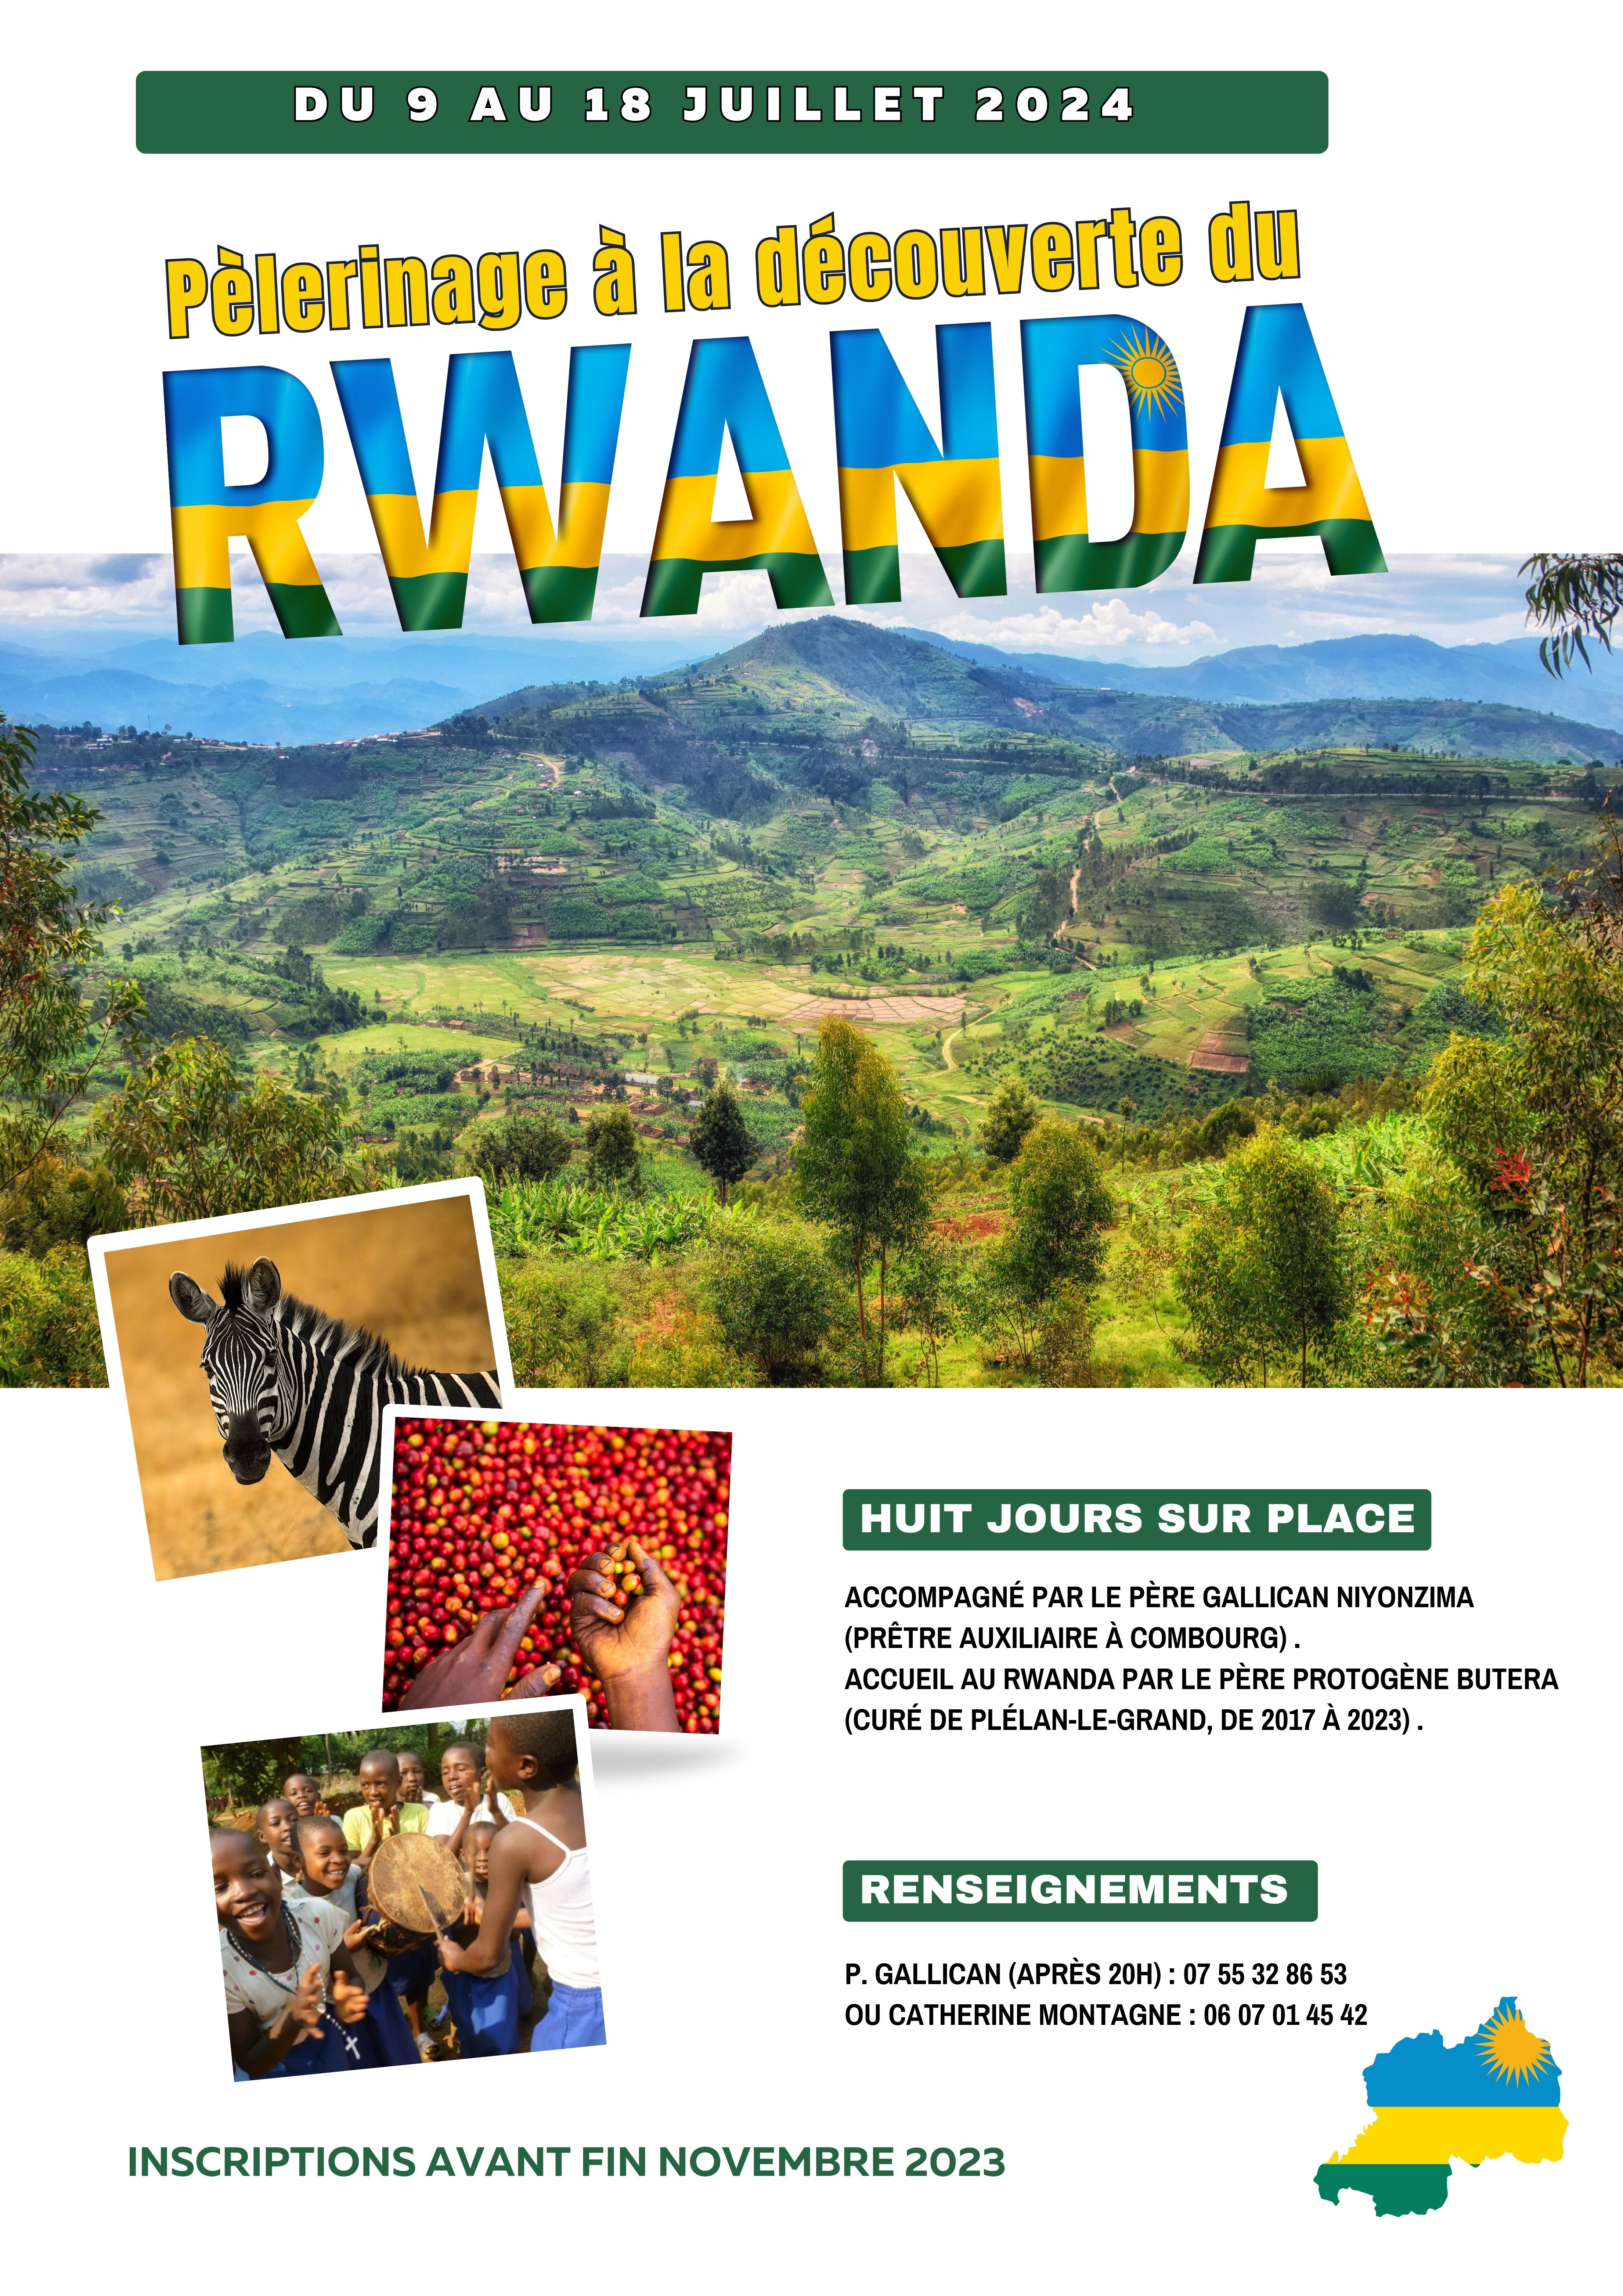 Découverte du Rwanda en 2024 ?